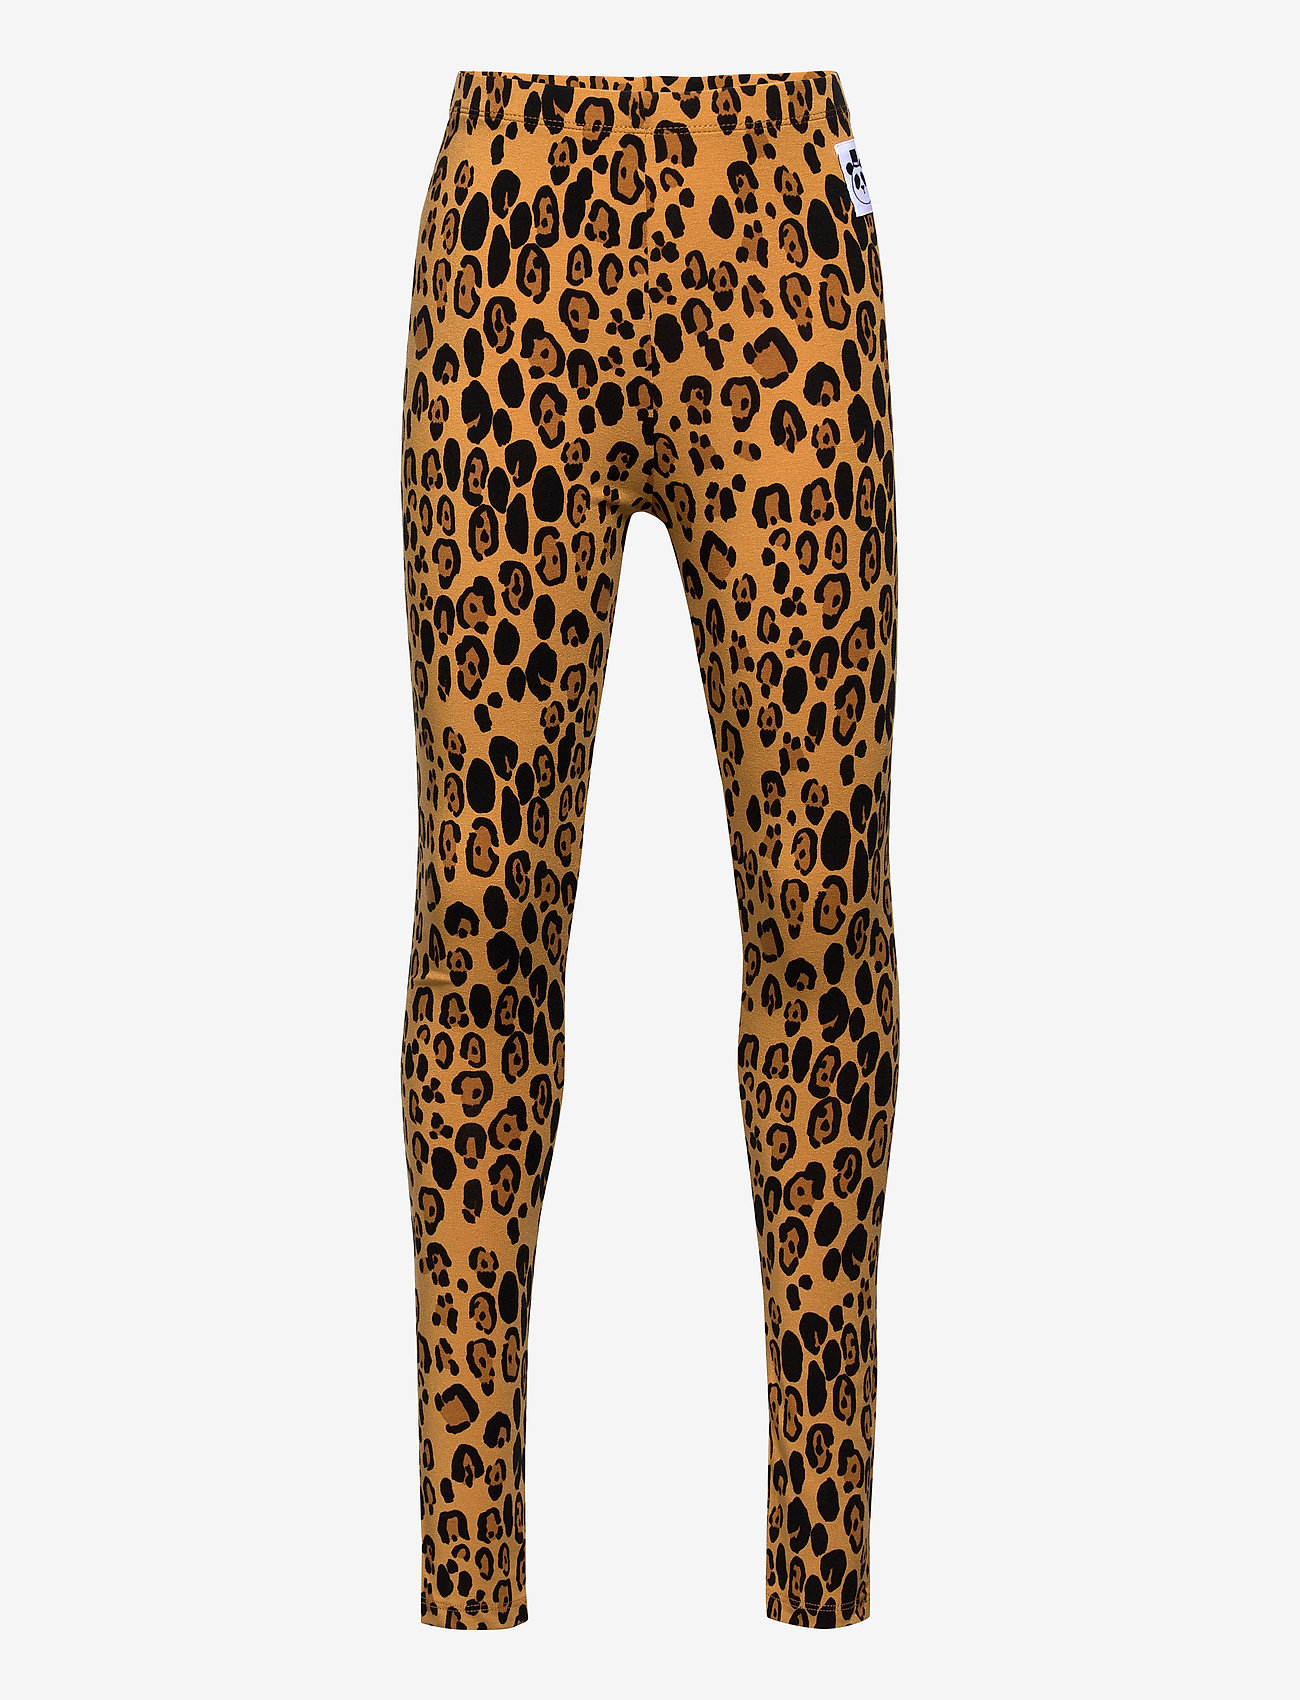 Mini Rodini - Basic leopard leggings - leginsy - beige - 0